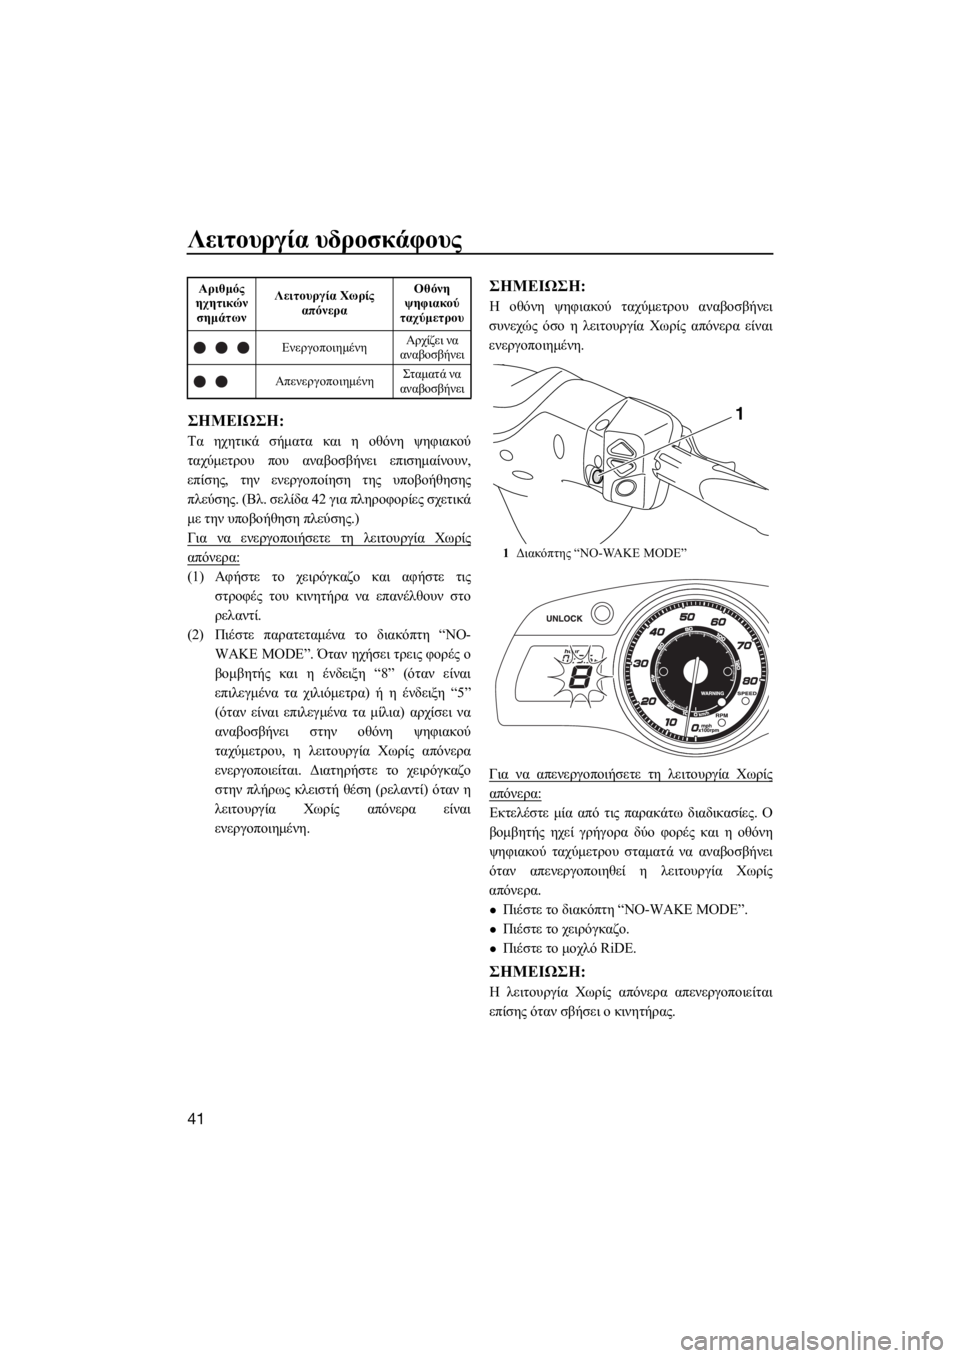 YAMAHA FX HO CRUISER 2015  ΟΔΗΓΌΣ ΧΡΉΣΗΣ (in Greek) Λειτουργία υδροσκάφους
41
ΣΗMΕΙΩΣΗ:
Τα ηχητικά σήματα και η οθόνη ψηφιακού
ταχύμετρου που αναβοσβήνει επισημ�